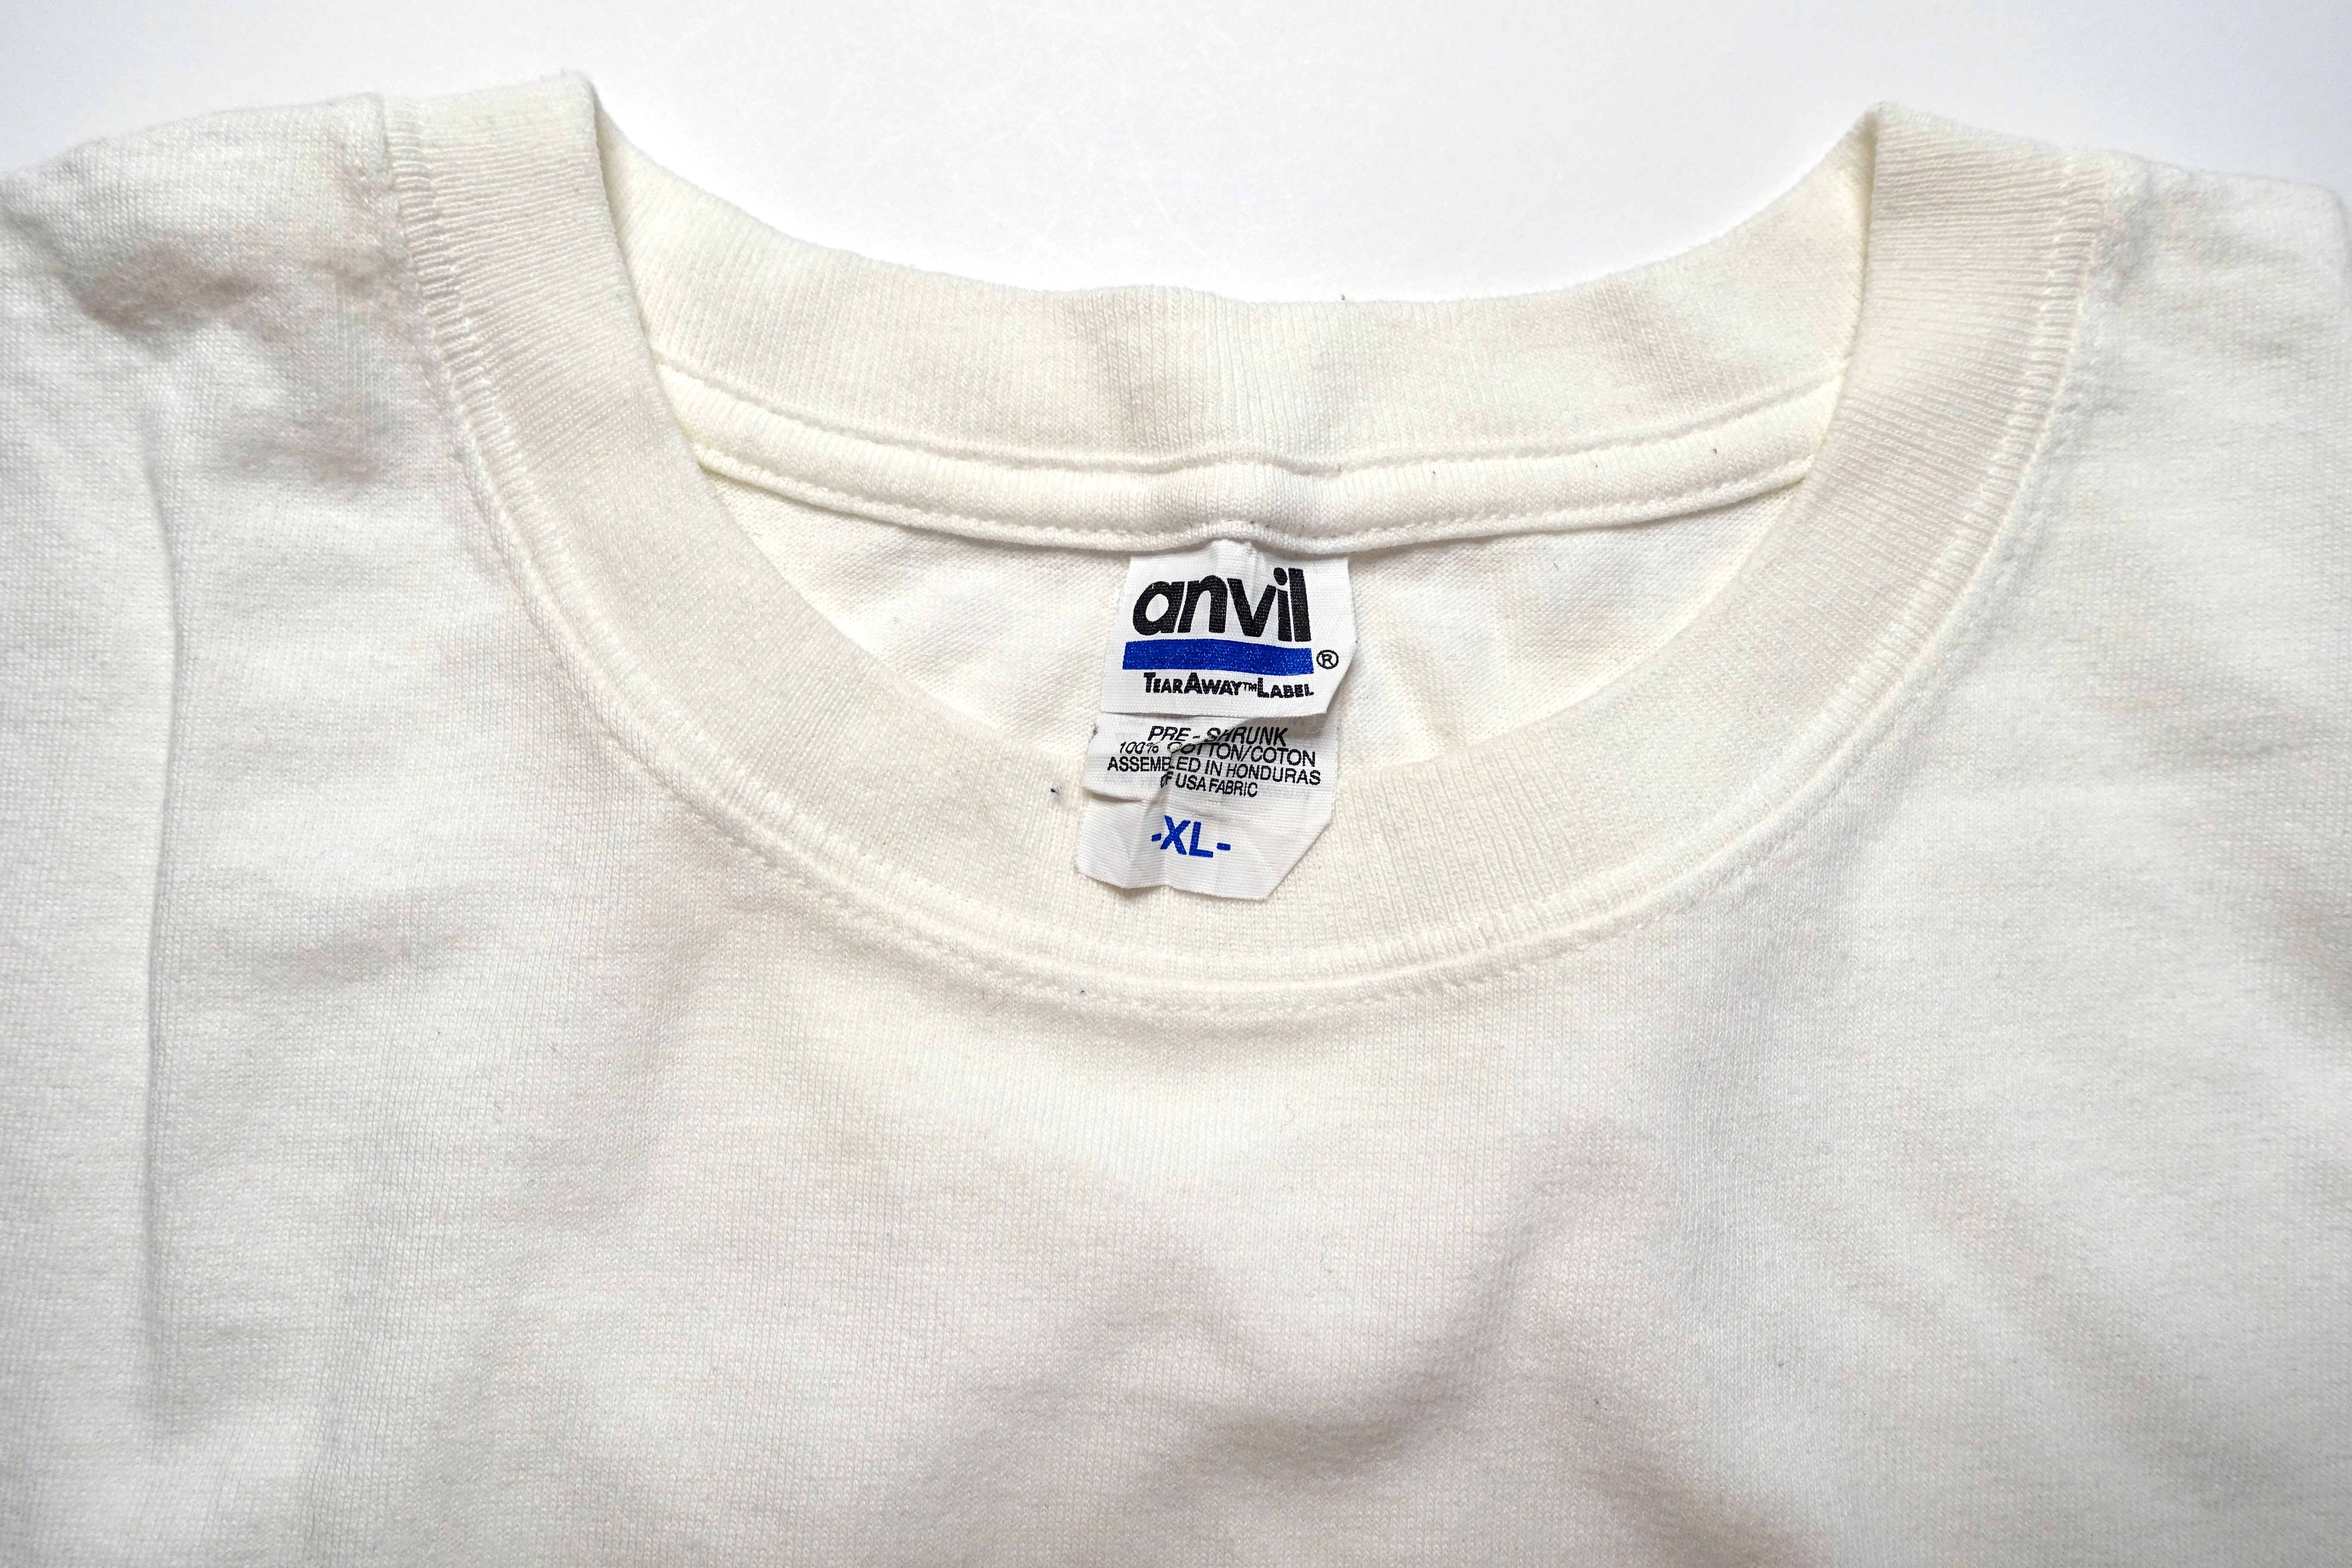 Jimmy Eat World - Colored Lines Tour Shirt Size XL